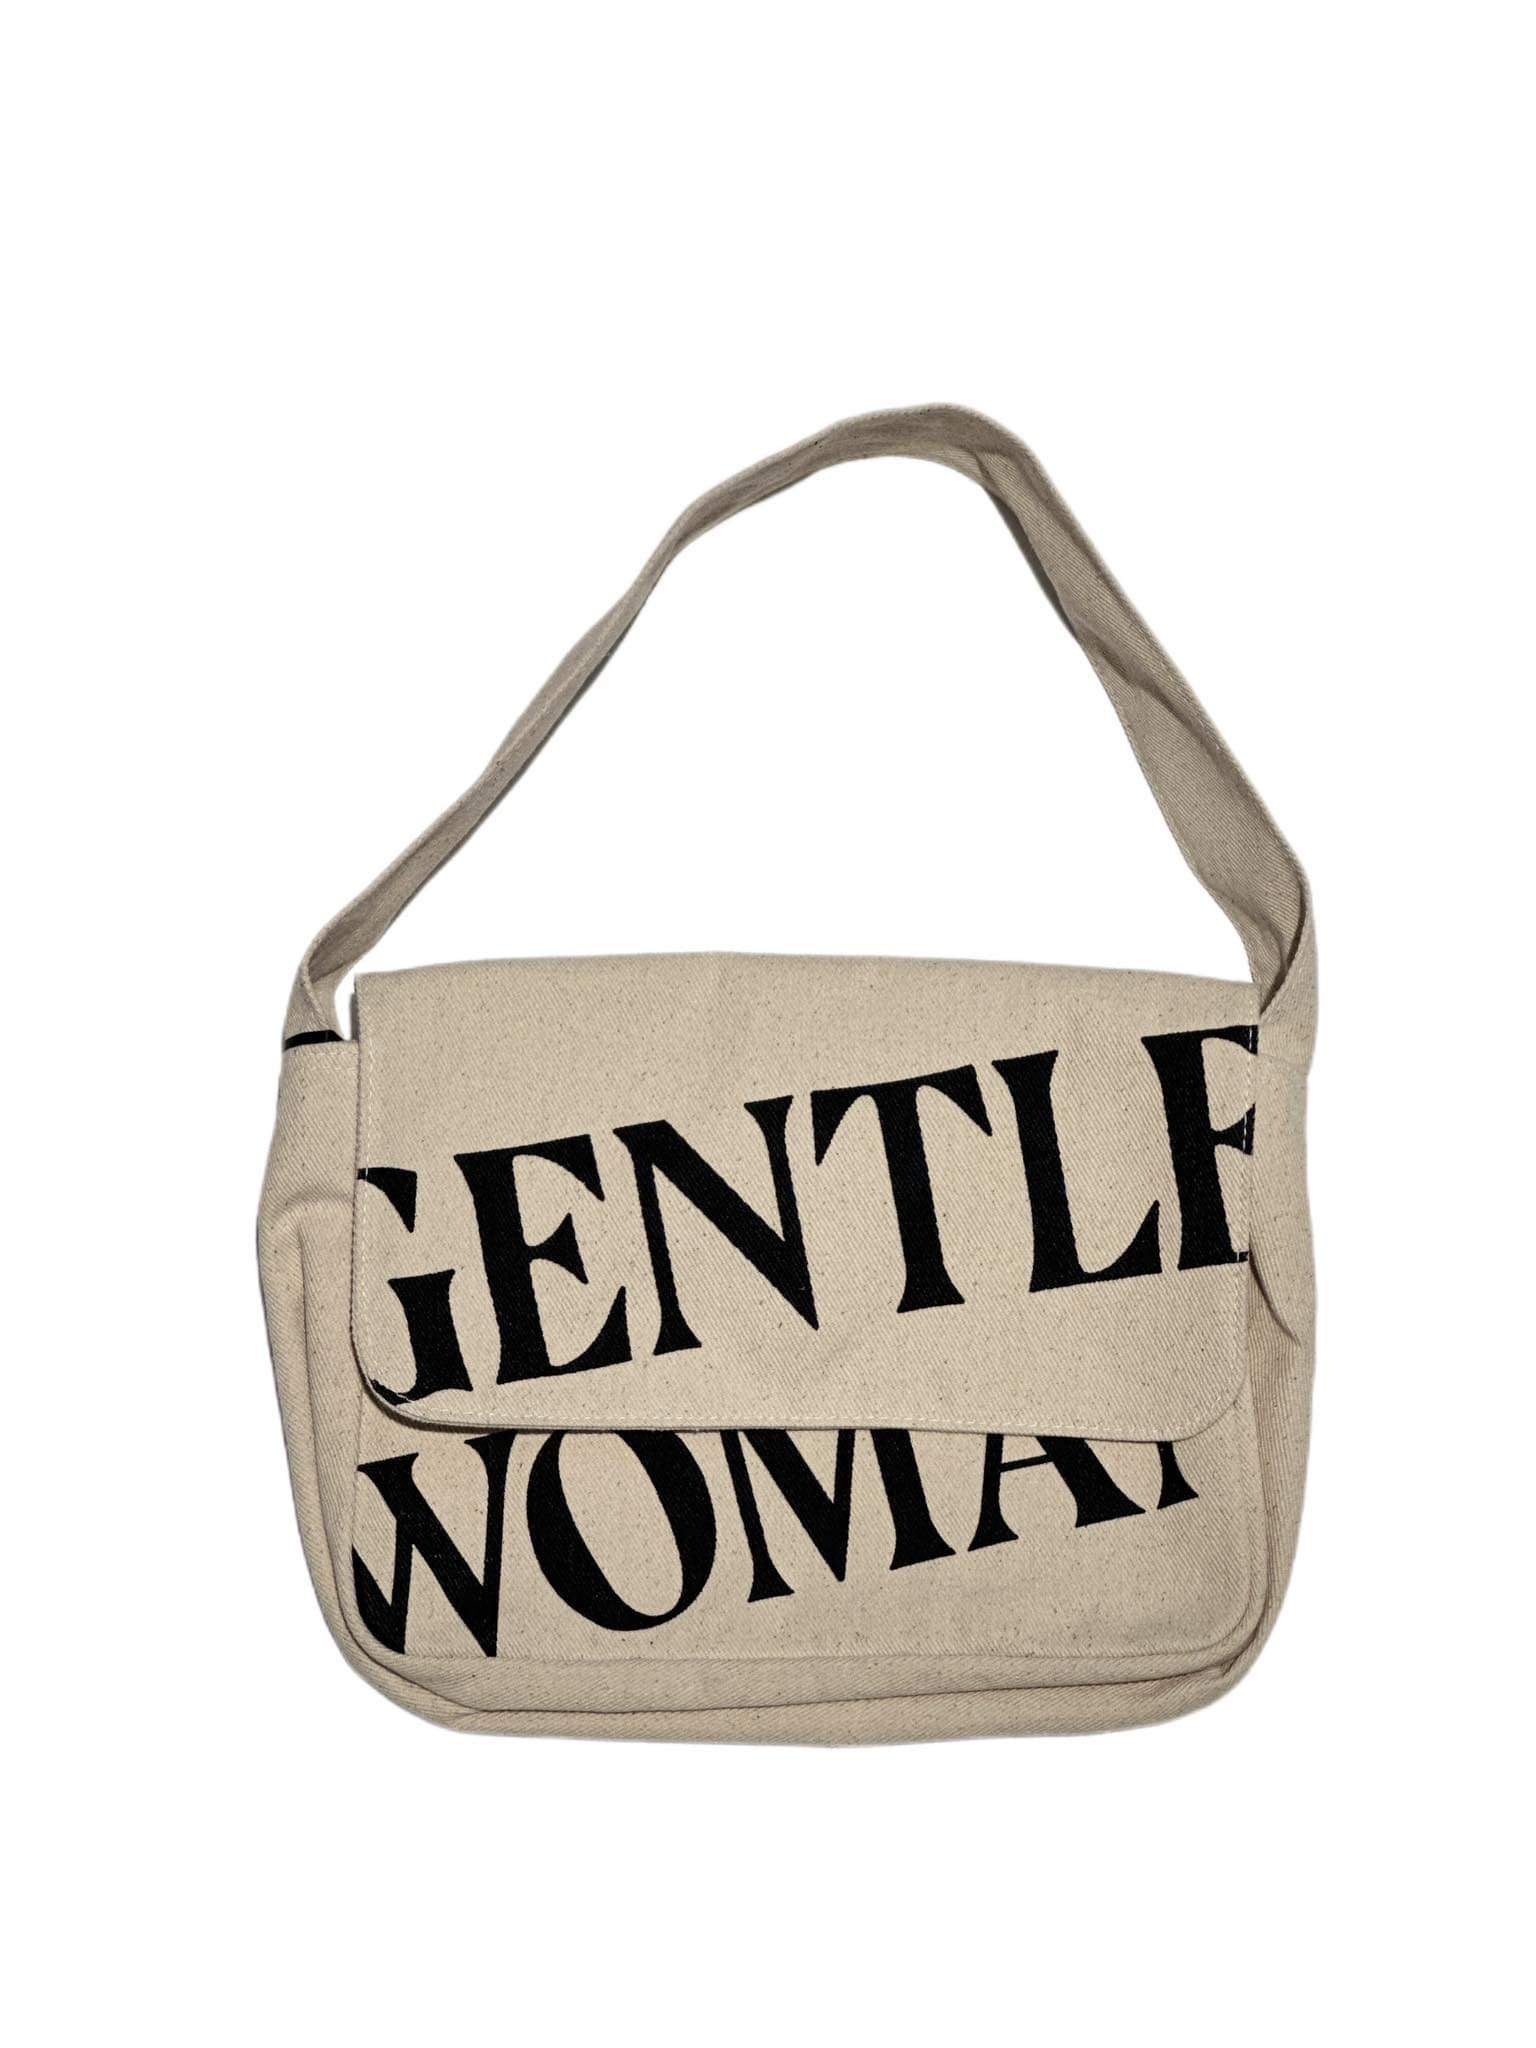 60s Narcissist Gentle Woman White Handbag